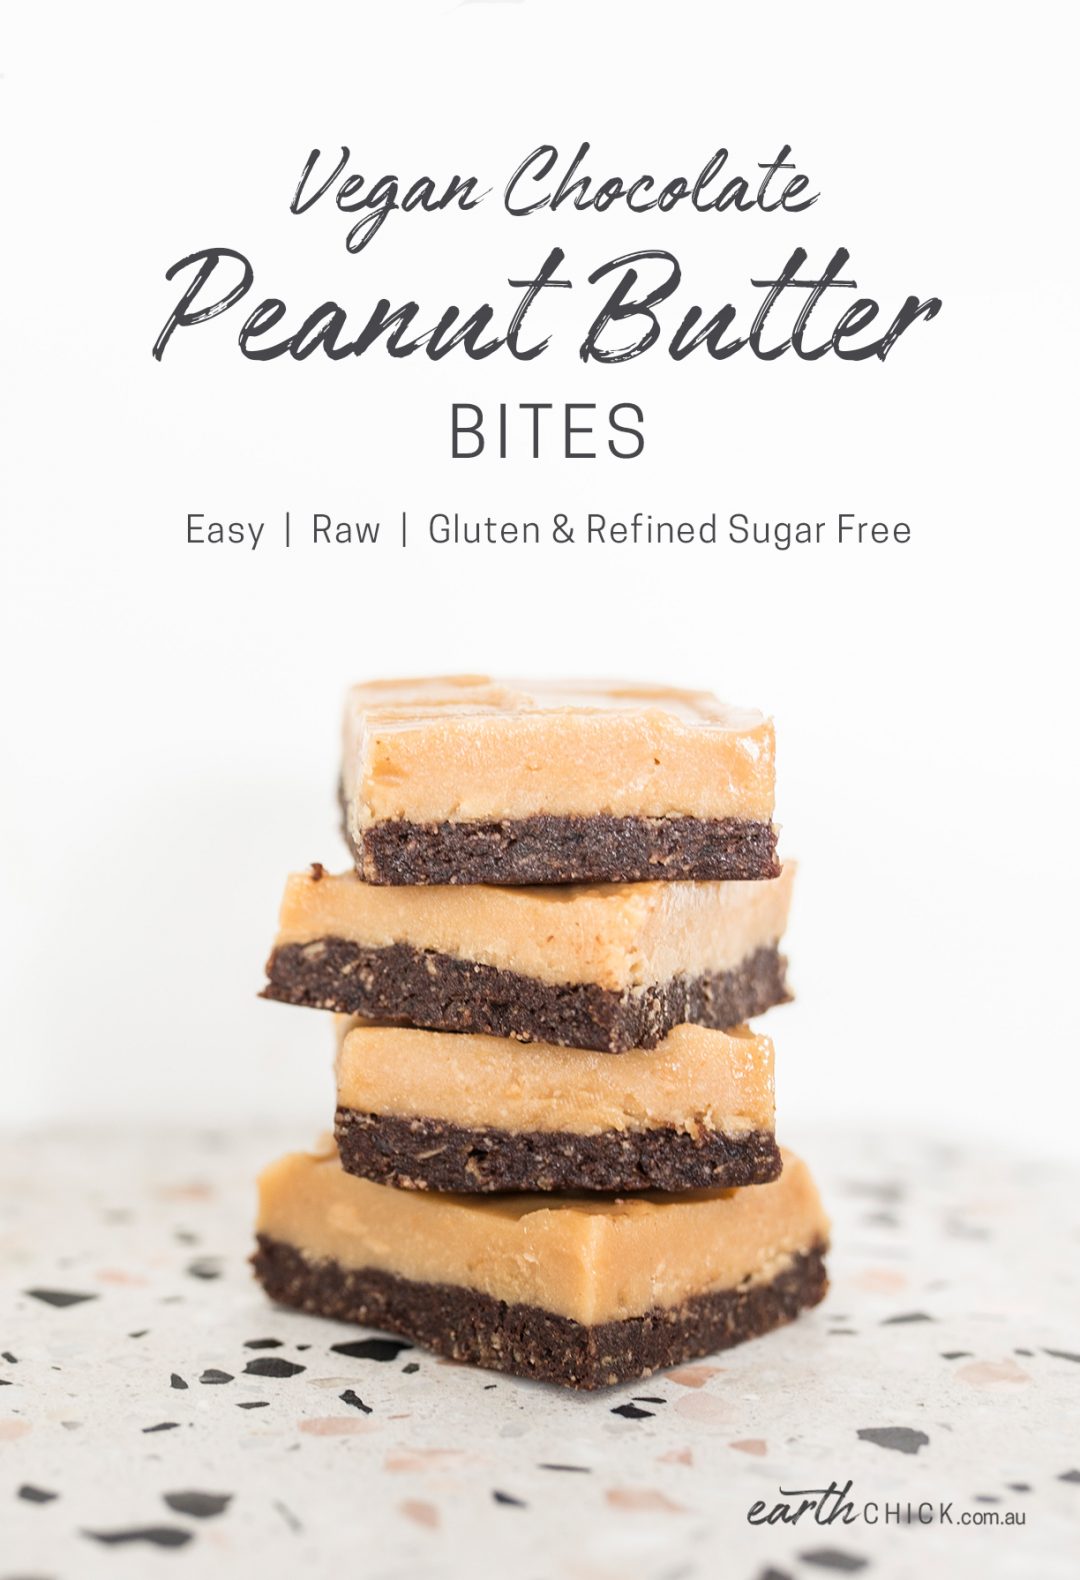 Vegan Chocolate Peanut Butter Fudge Bites (Gluten Free!) - Earth Chick